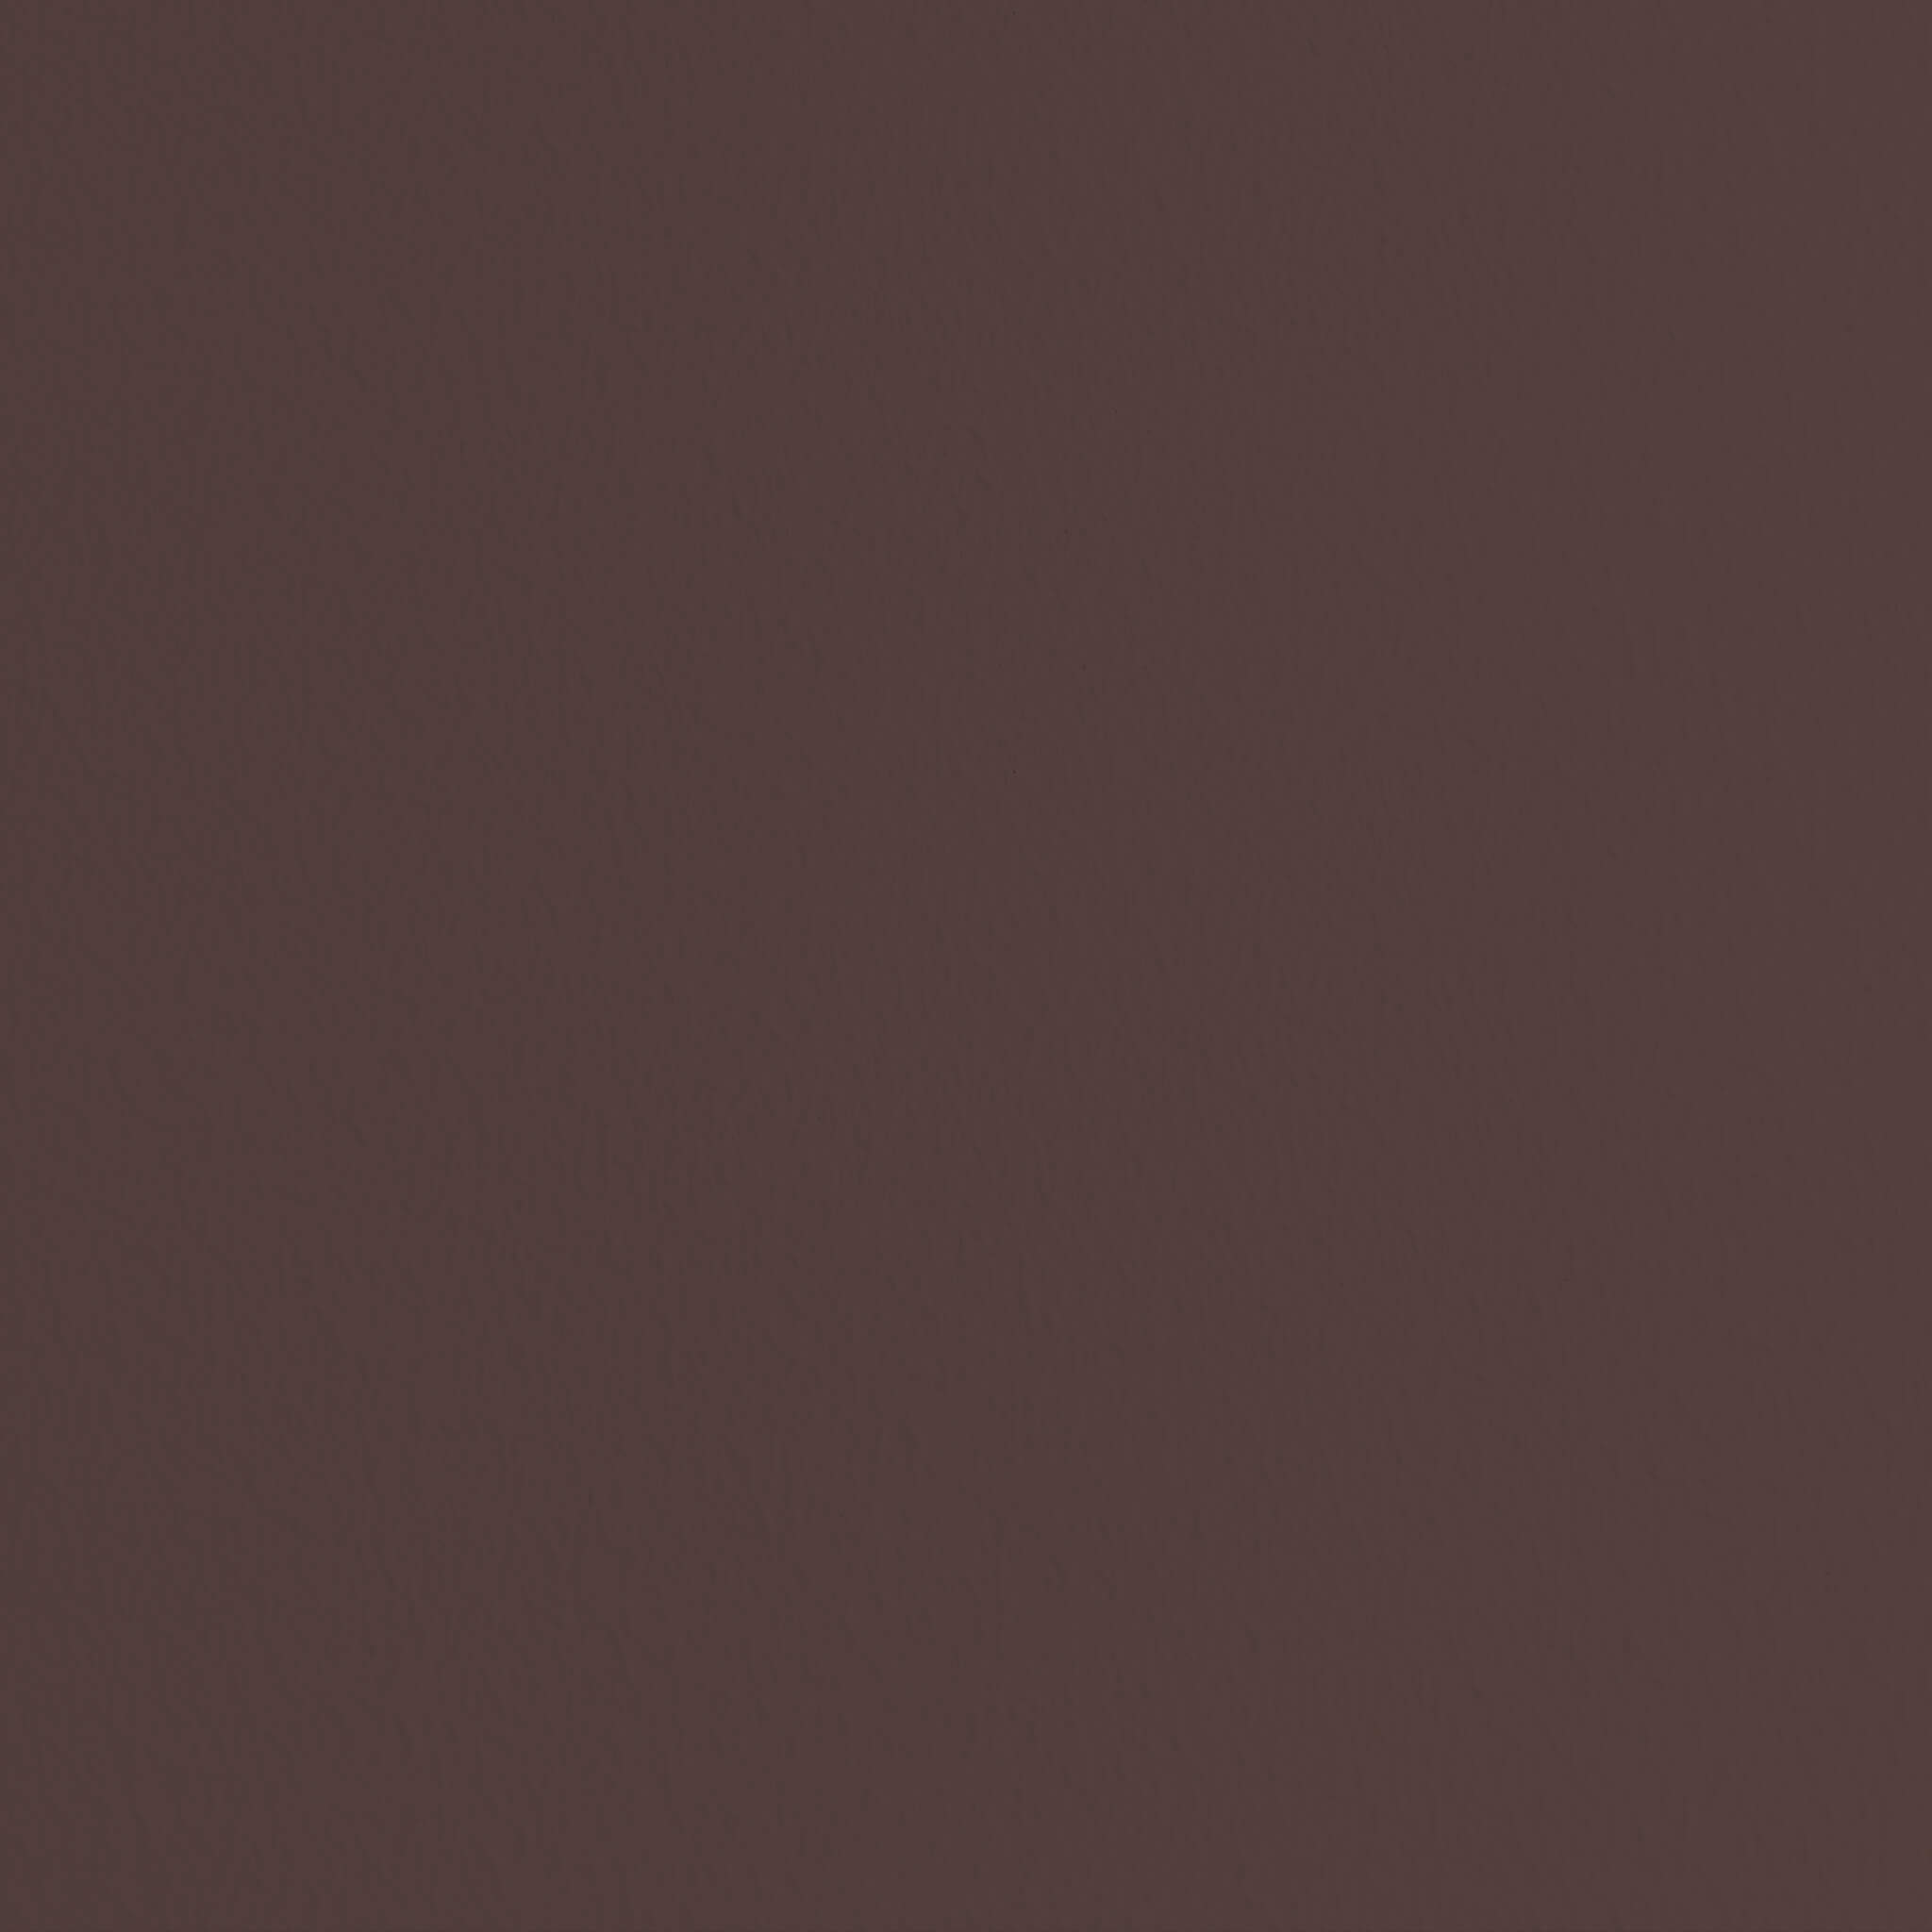 MissPompadour Bruin met Pure Chocolade - Matte lak 2.5L